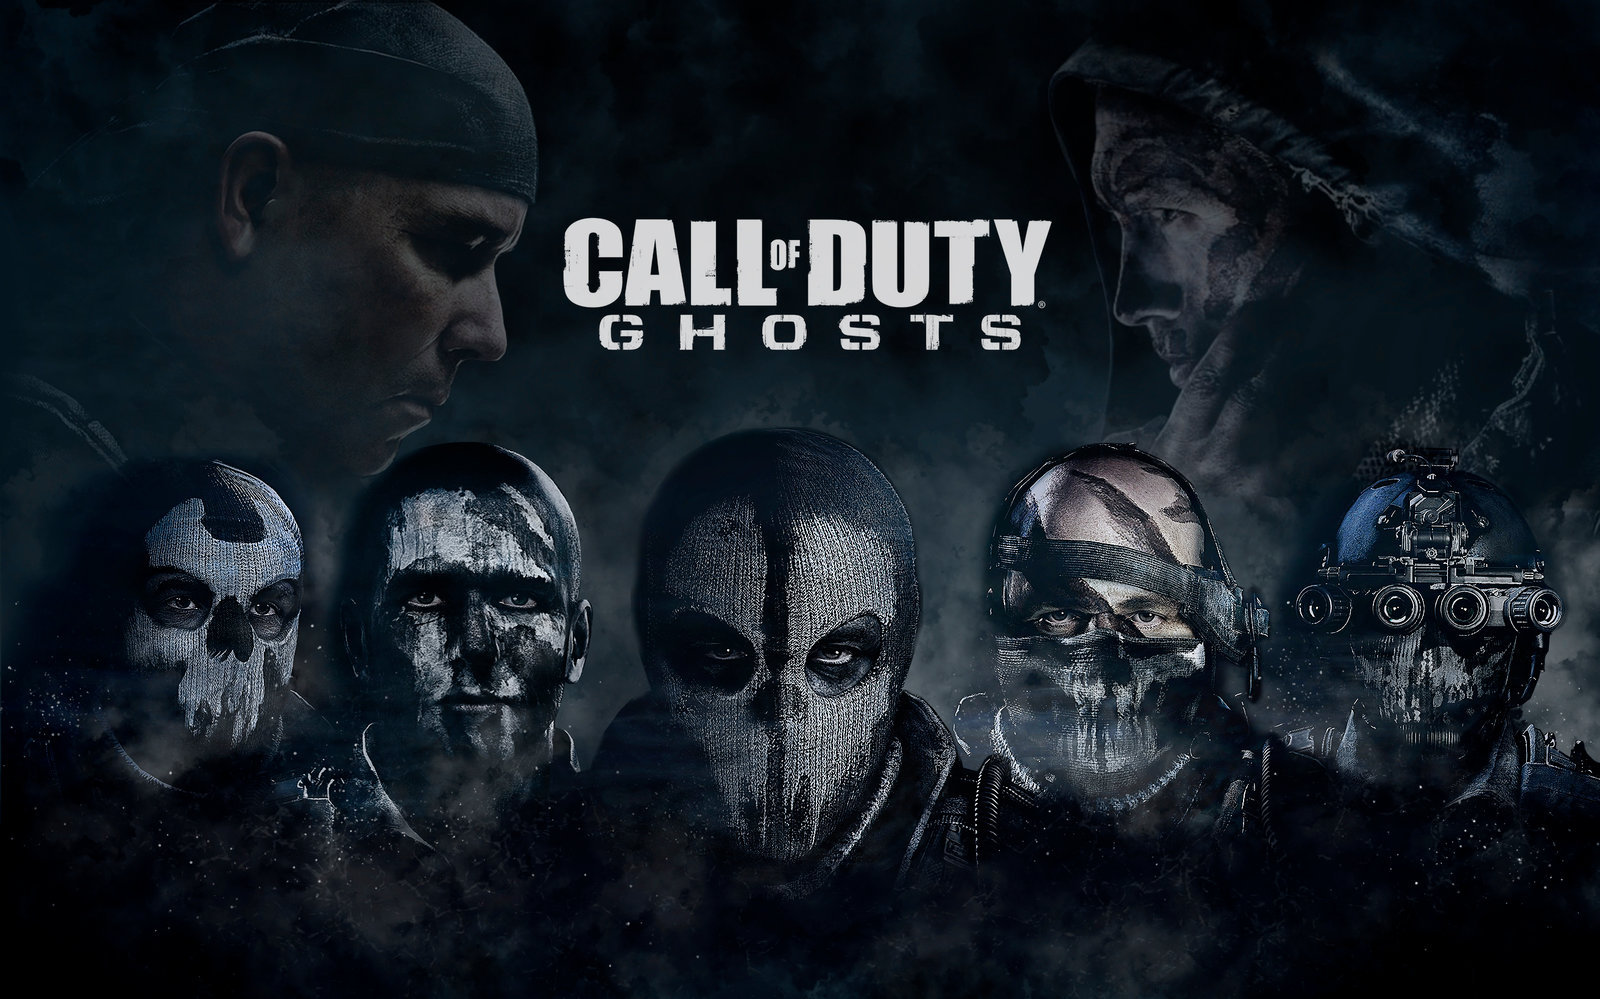 سی دی کی اریجینال استیم بازی Call Of Duty: Ghosts